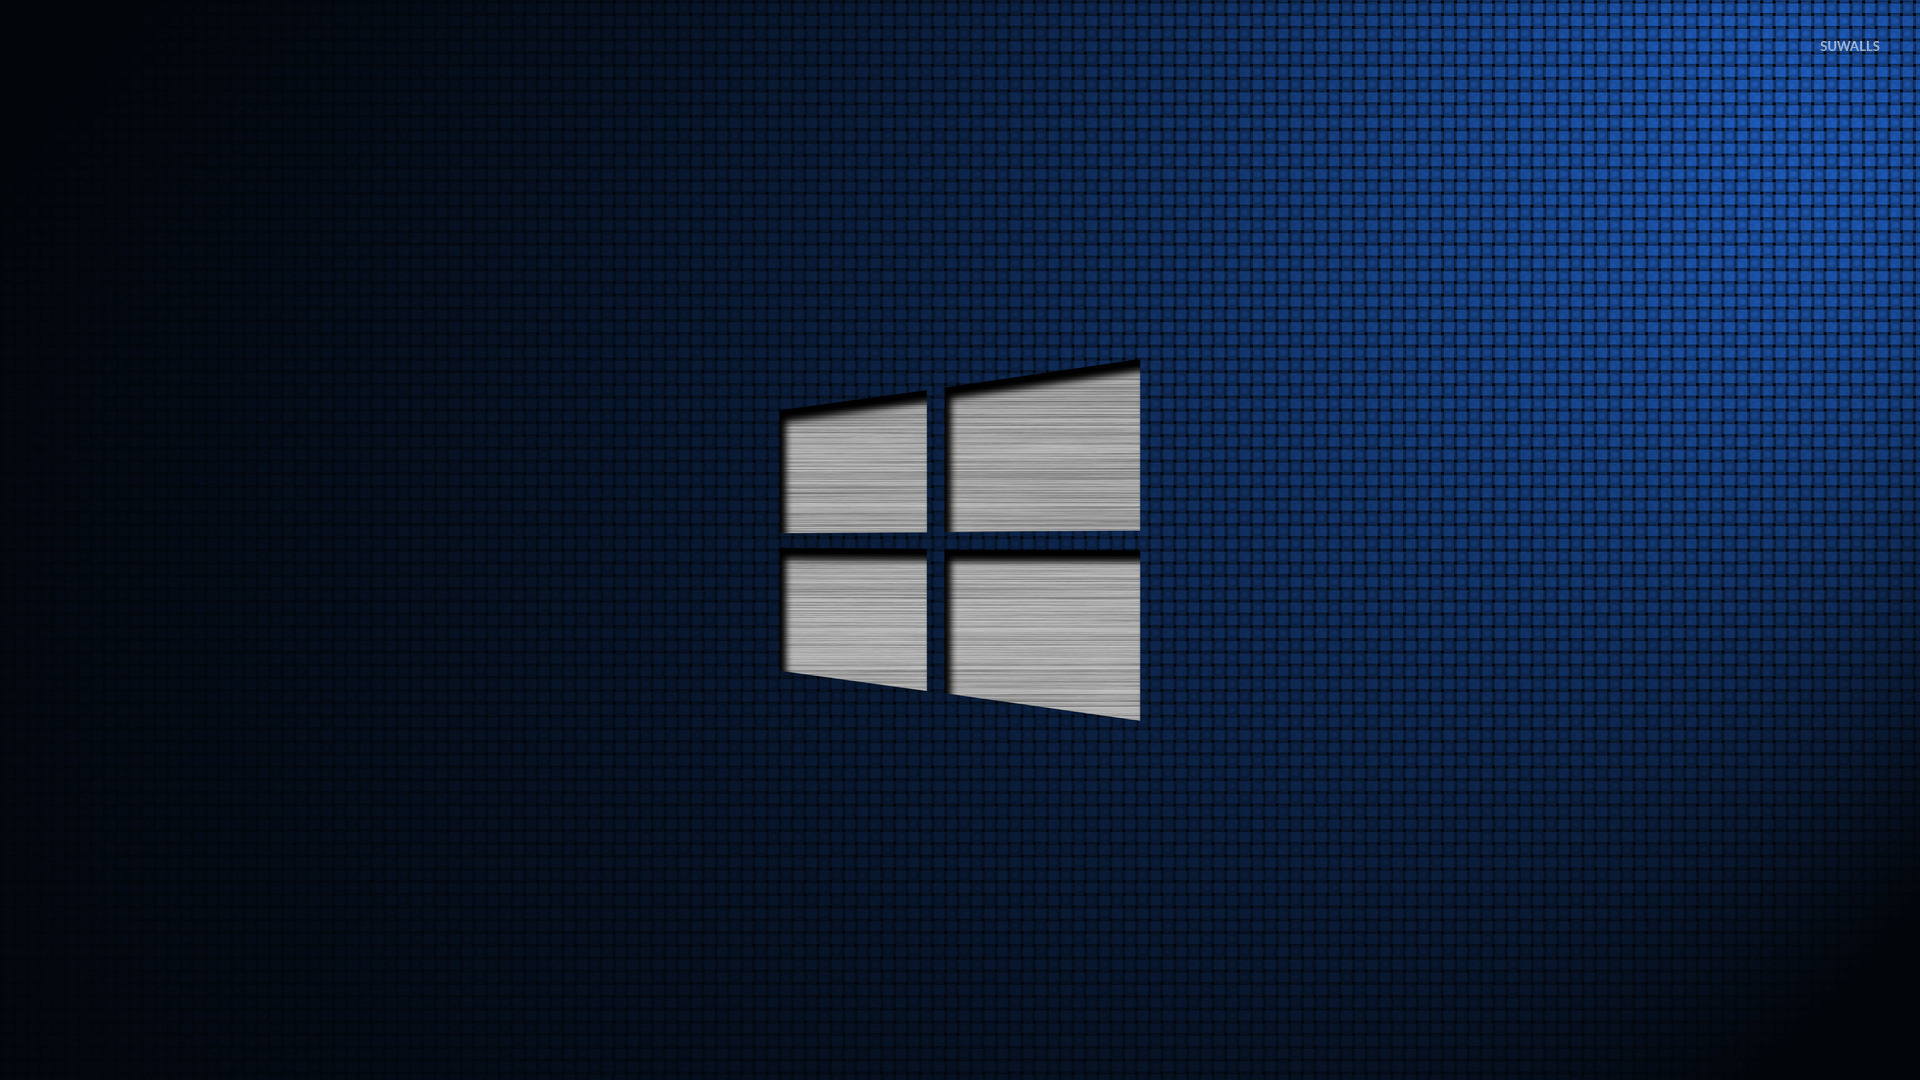 Metal Windows 10 on weave wallpaper - Computer wallpapers - #46645